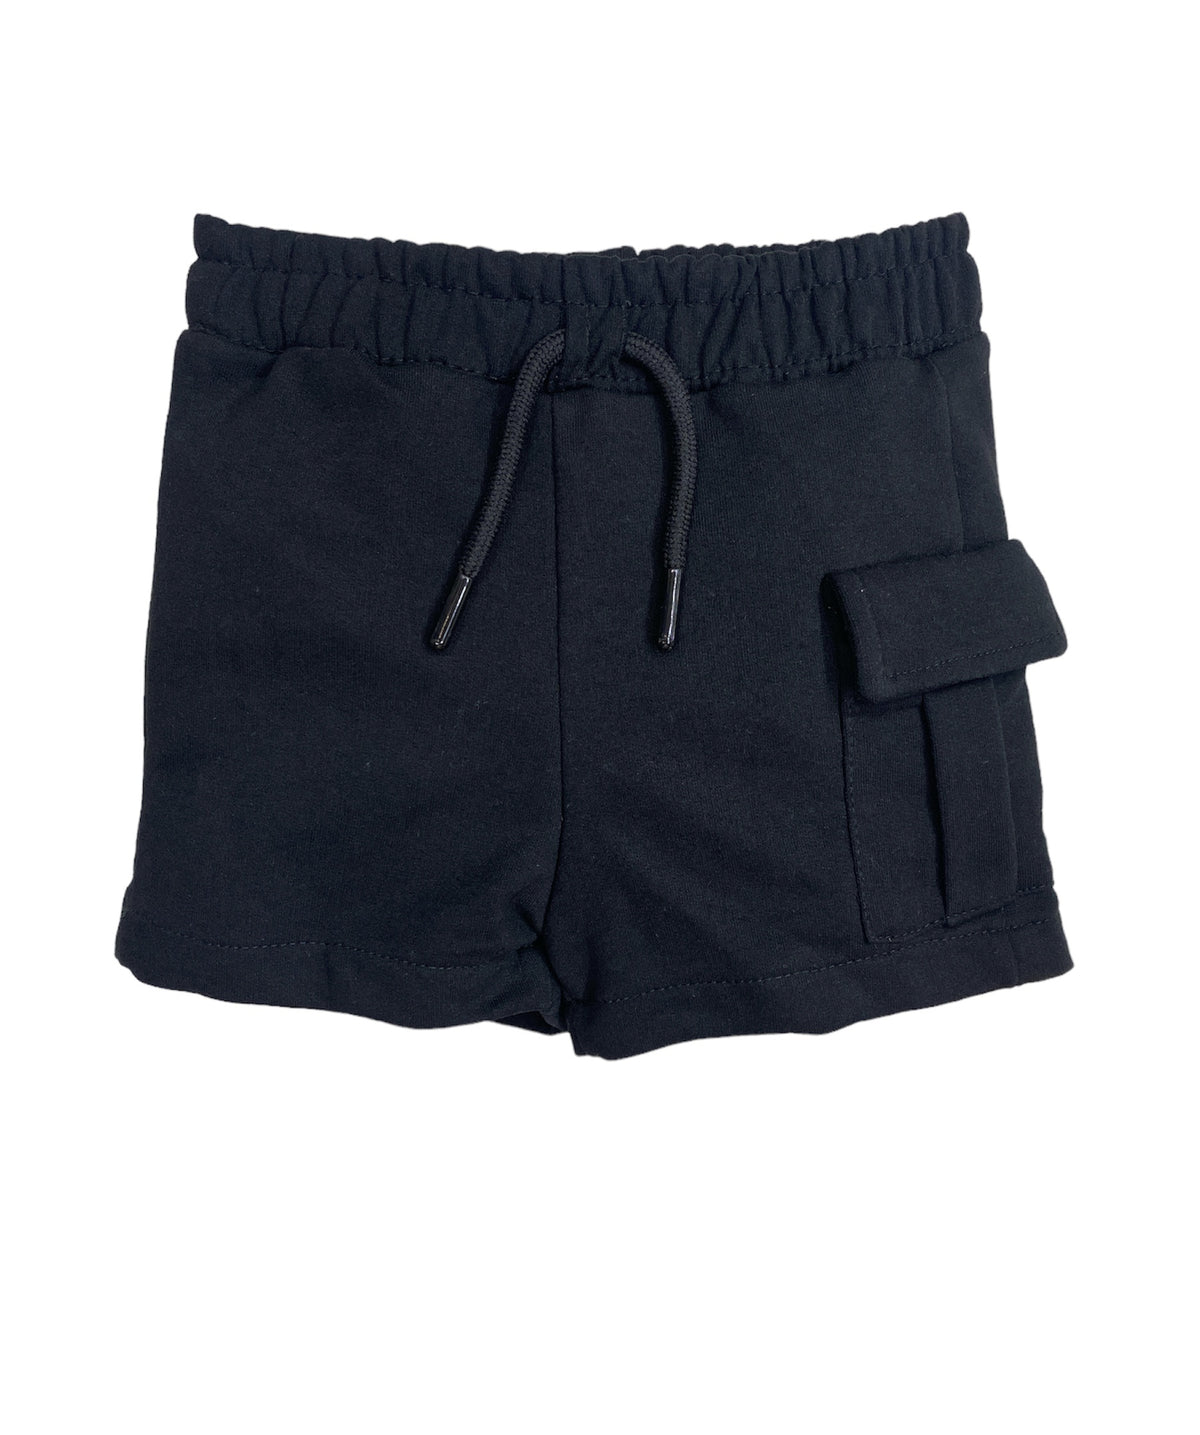 Round Lastic Cotton Shorts - Black